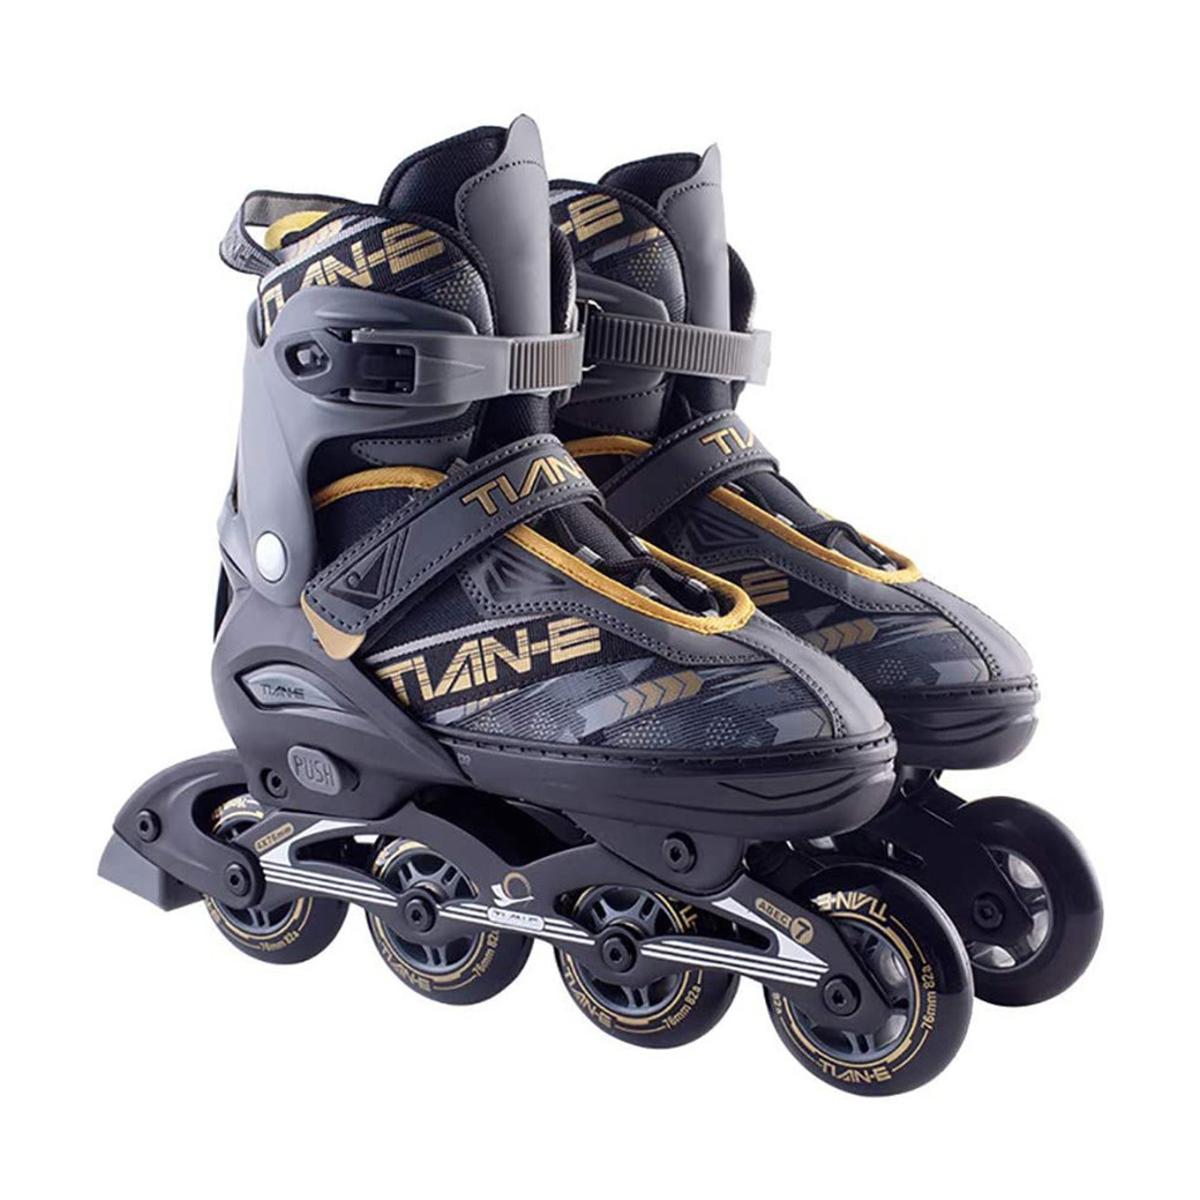 Roller skate shoes inline(size 38-42)